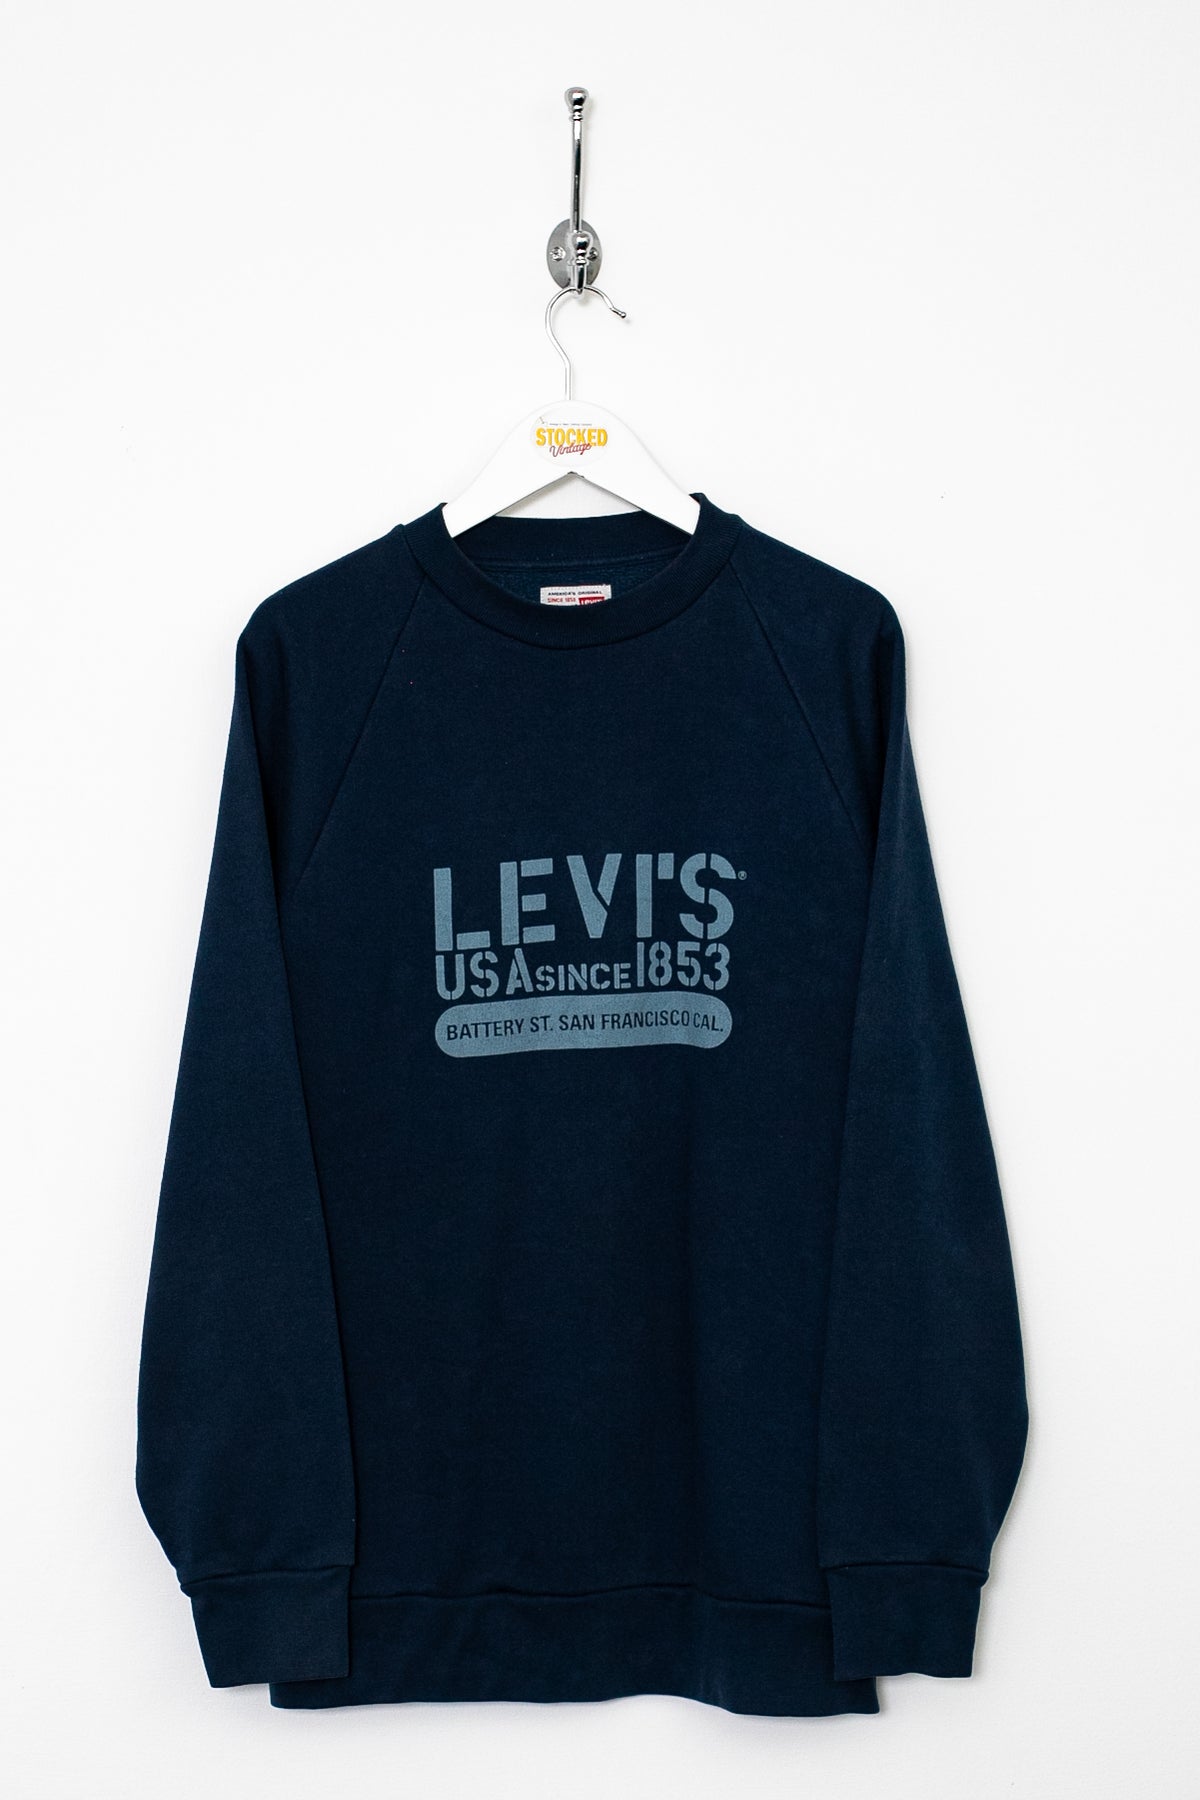 00s Levi's Sweatshirt (M)